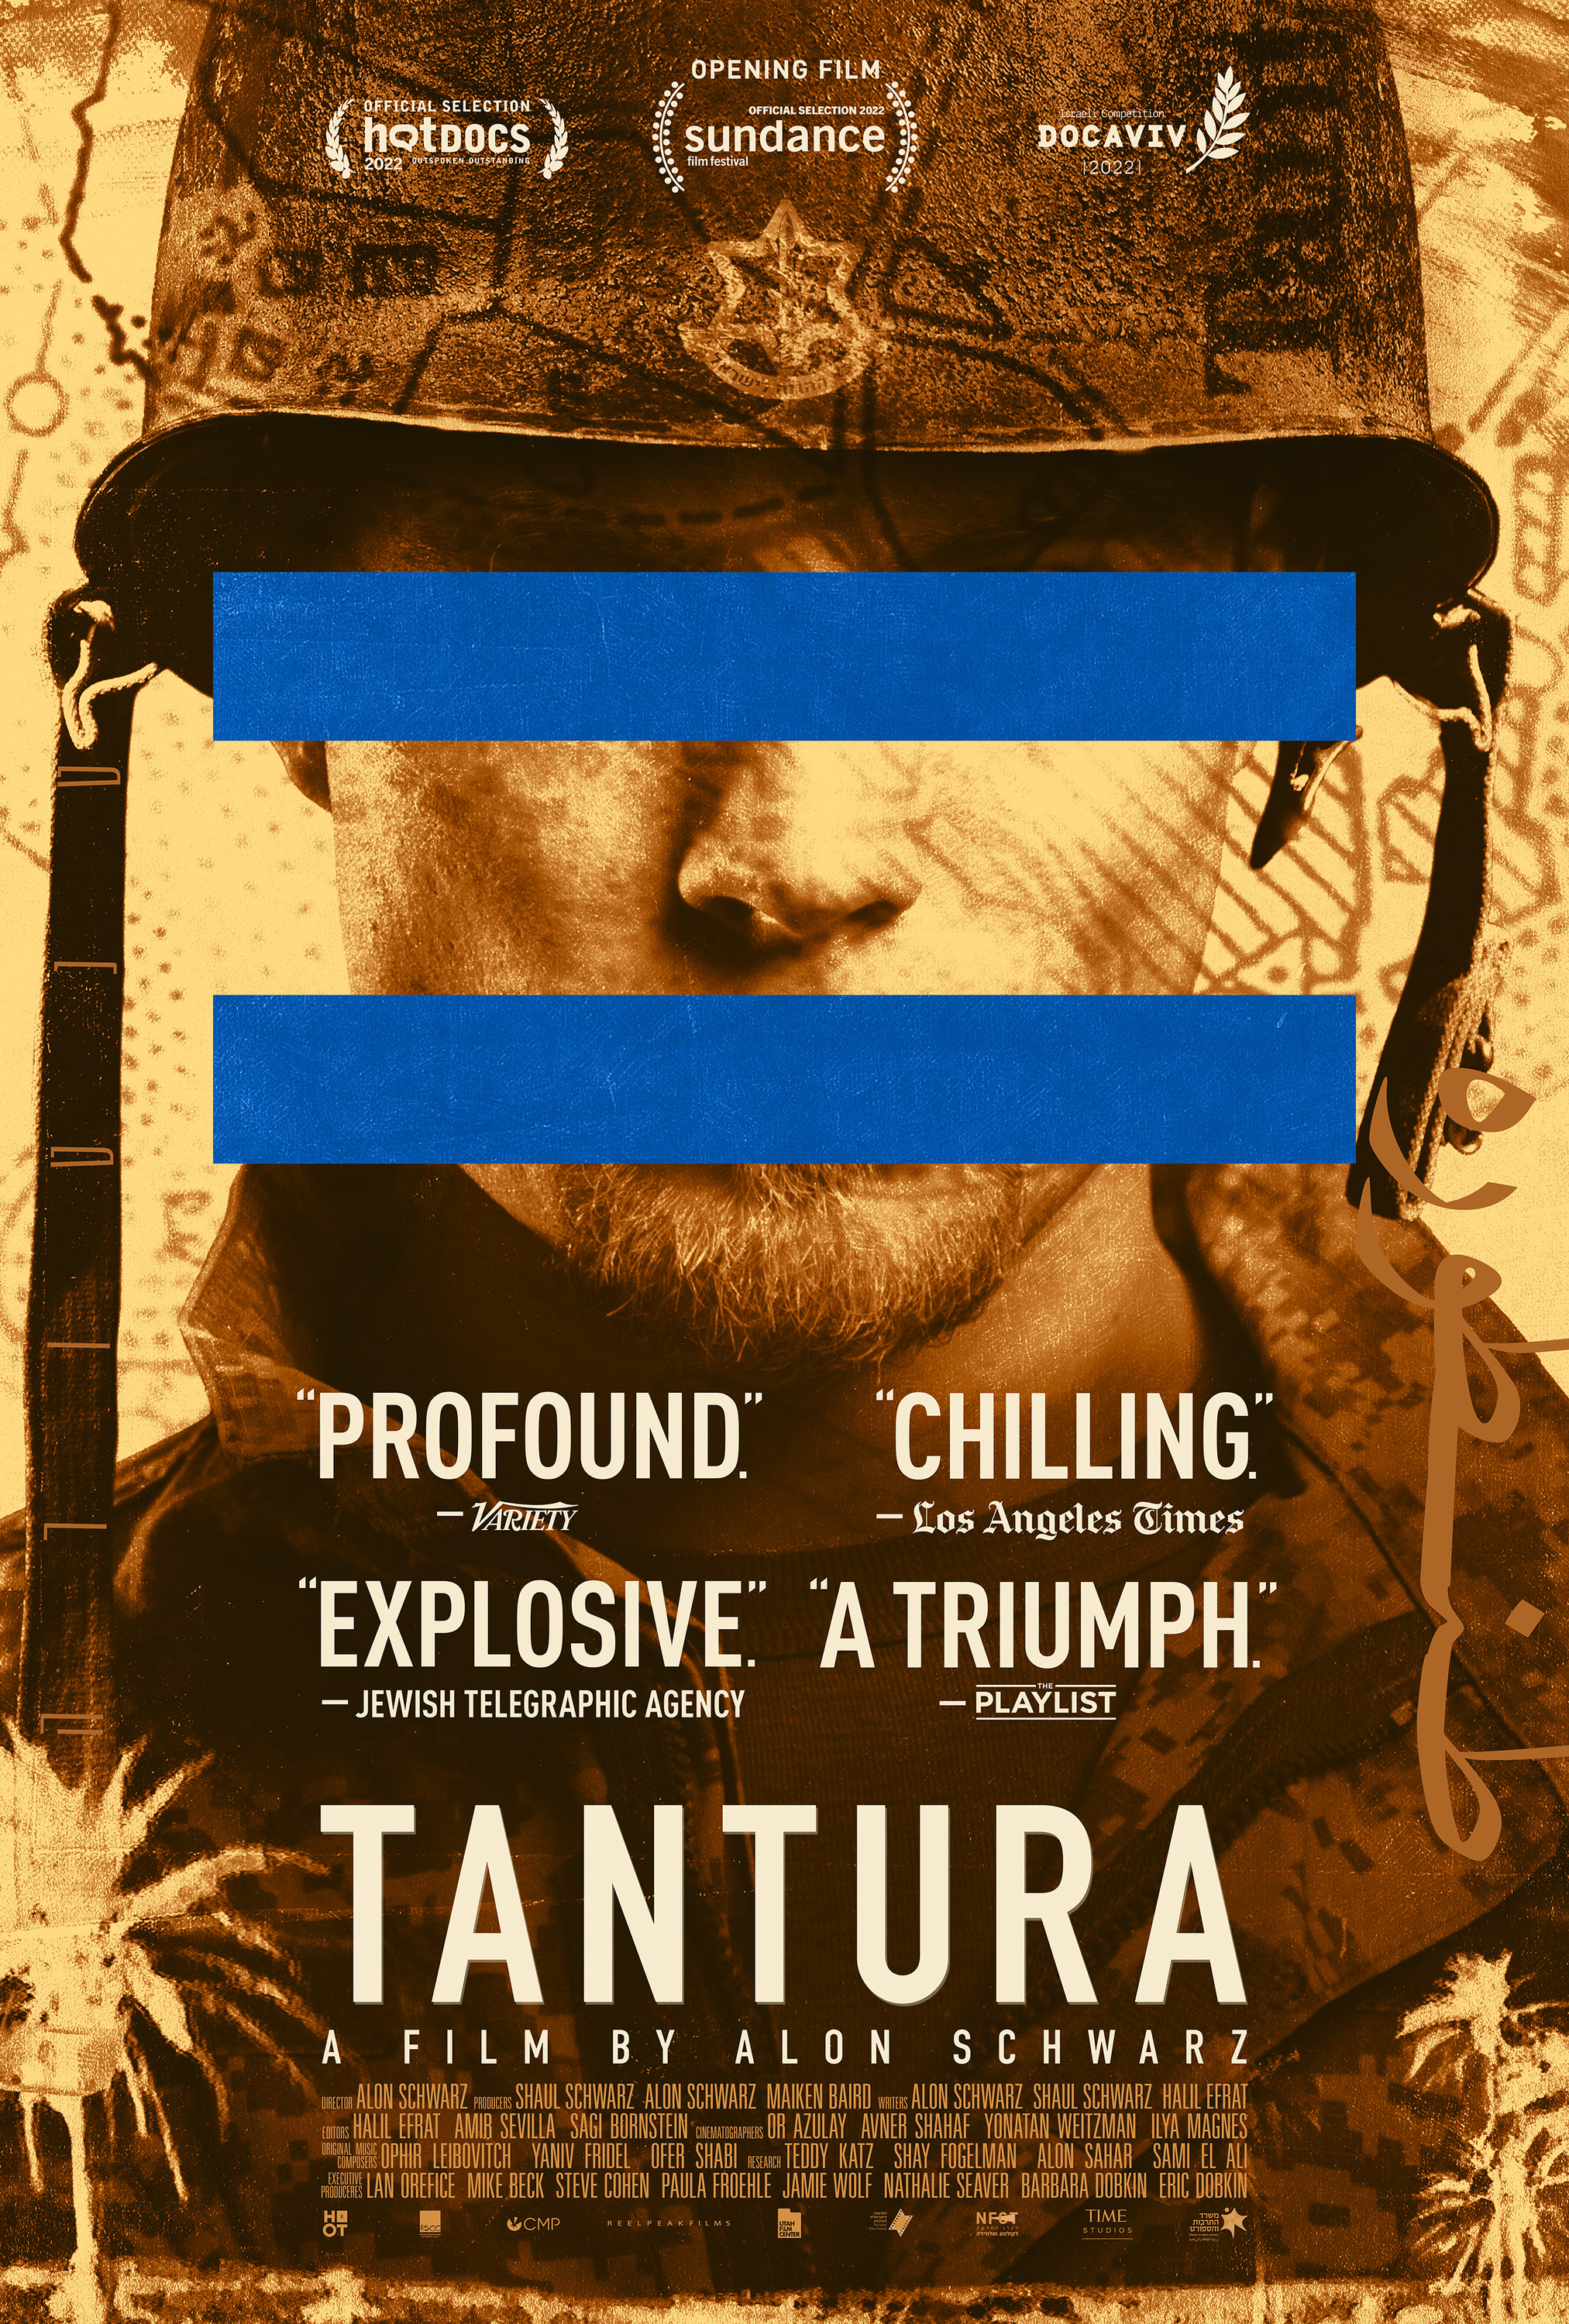 Mega Sized Movie Poster Image for Tantura (#2 of 2)